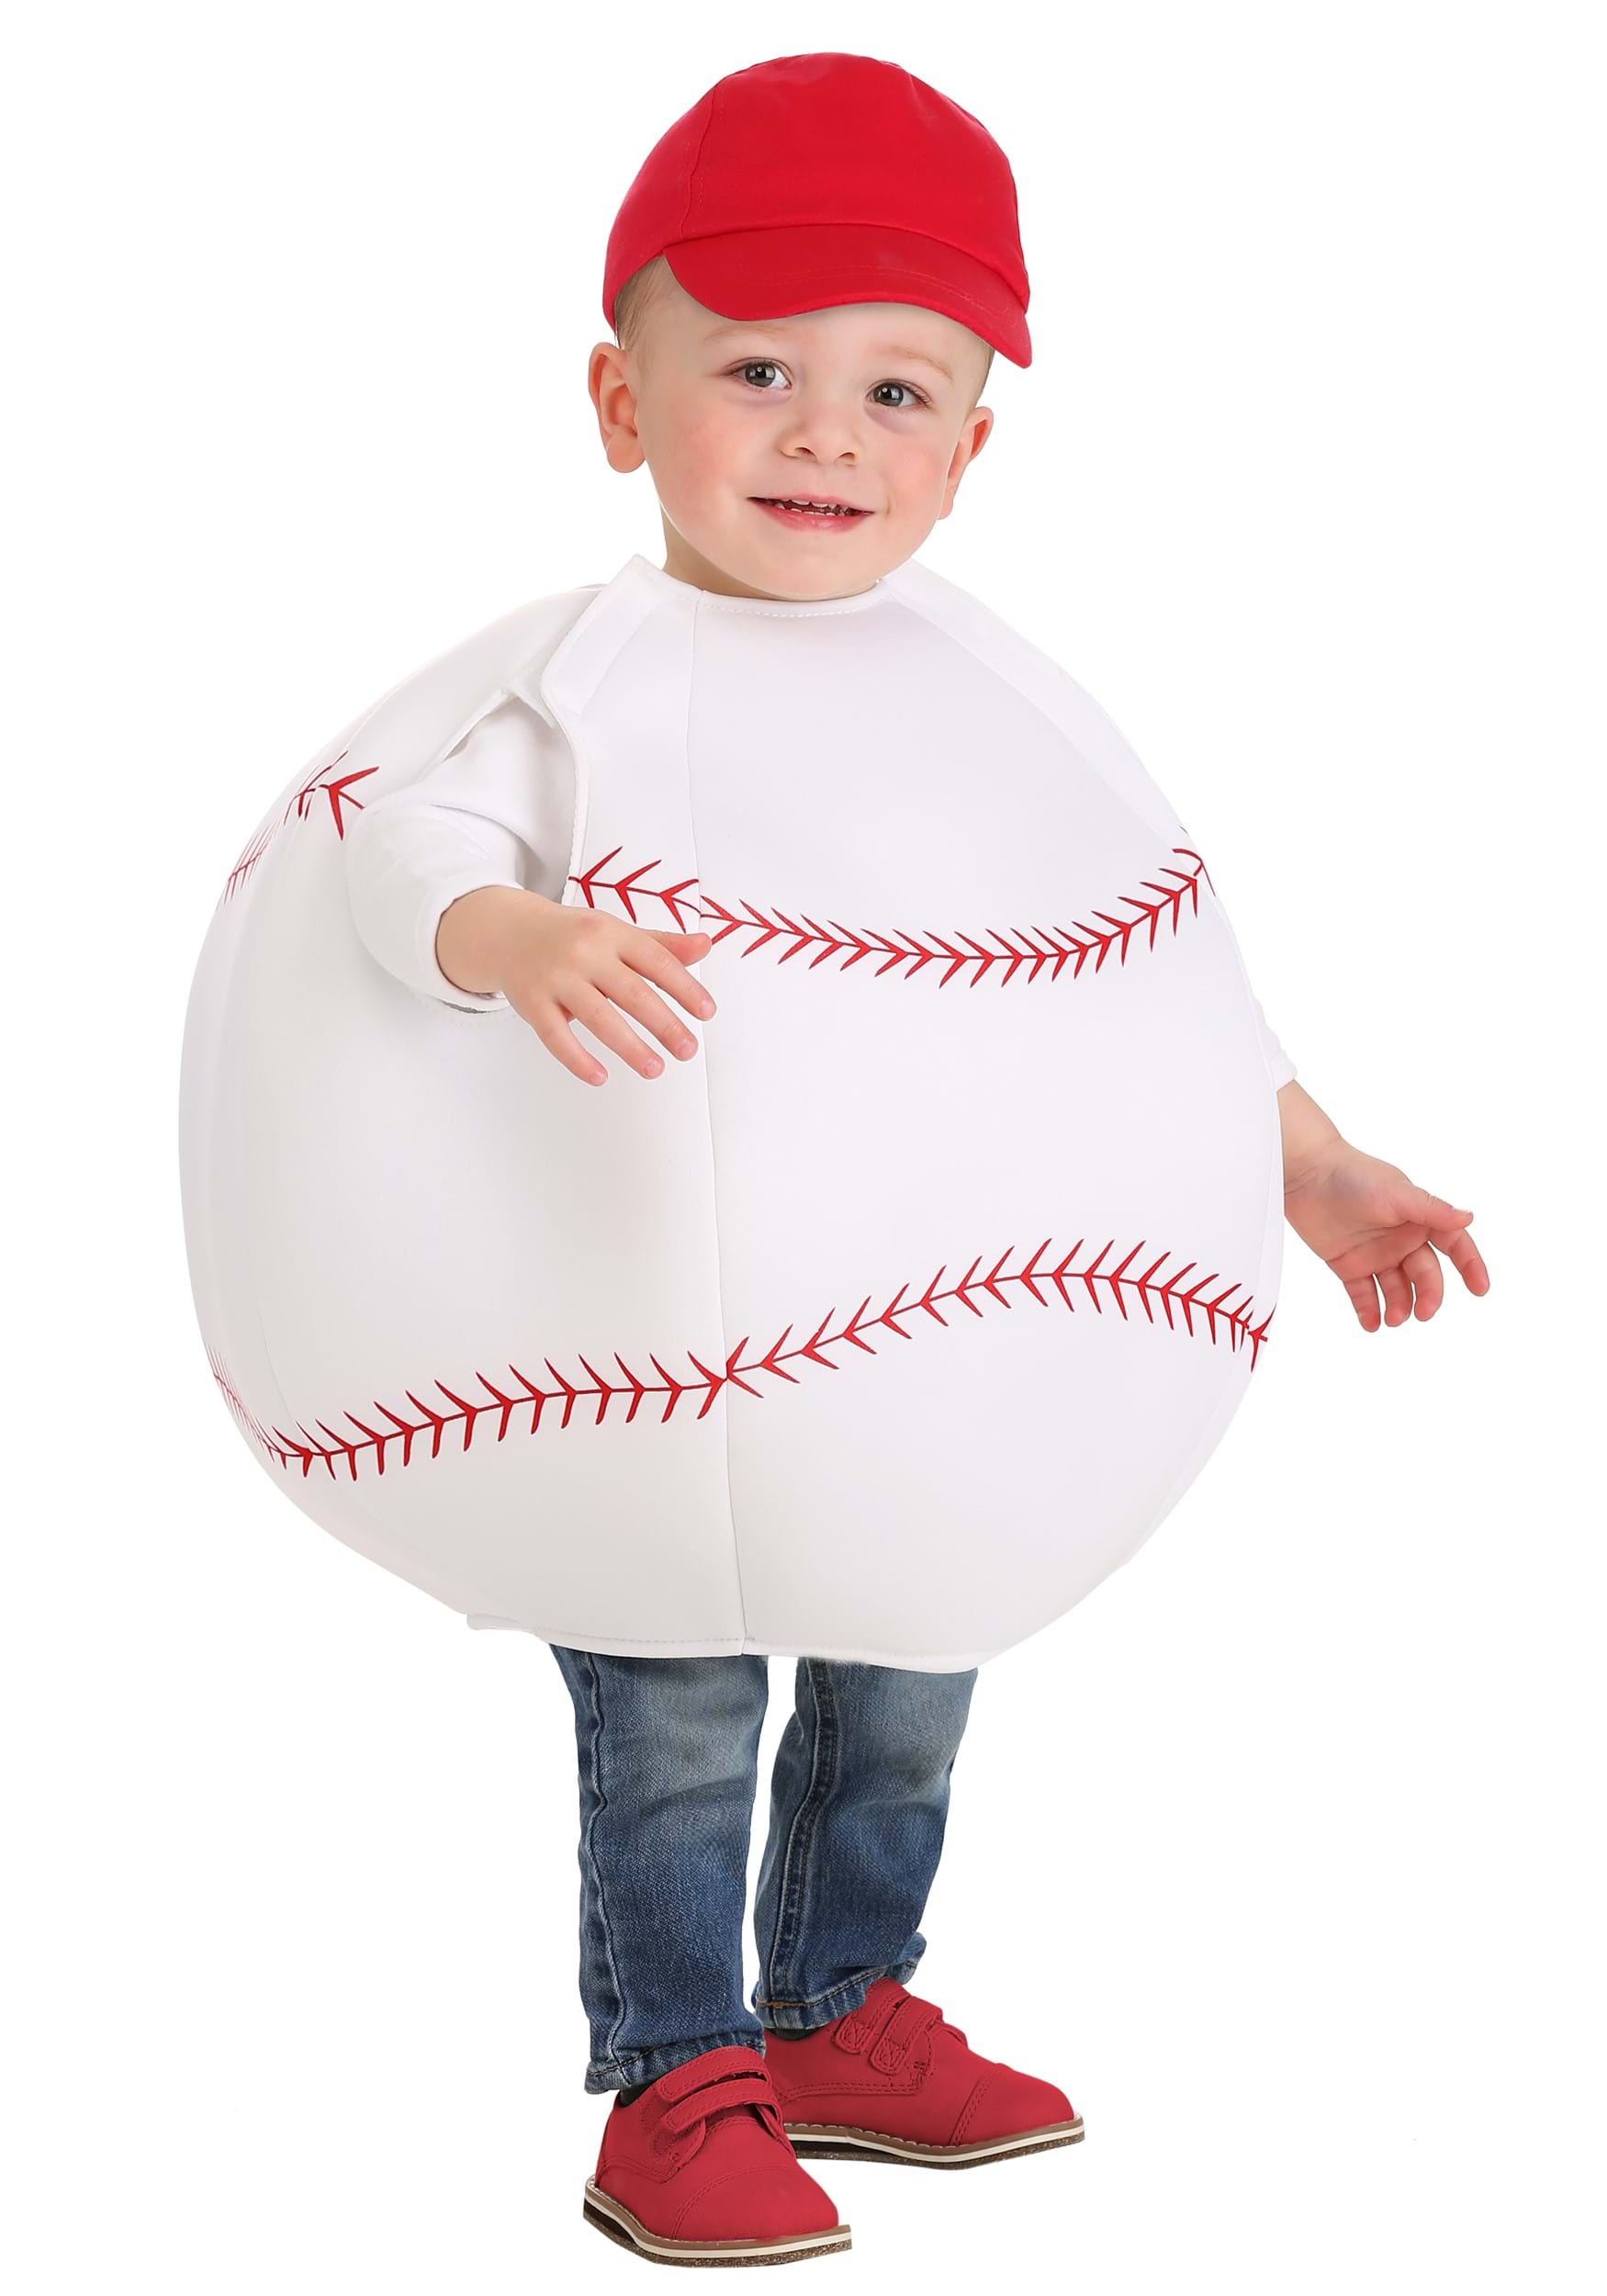 Baseball Player Child Halloween Costume, 3T-4T 